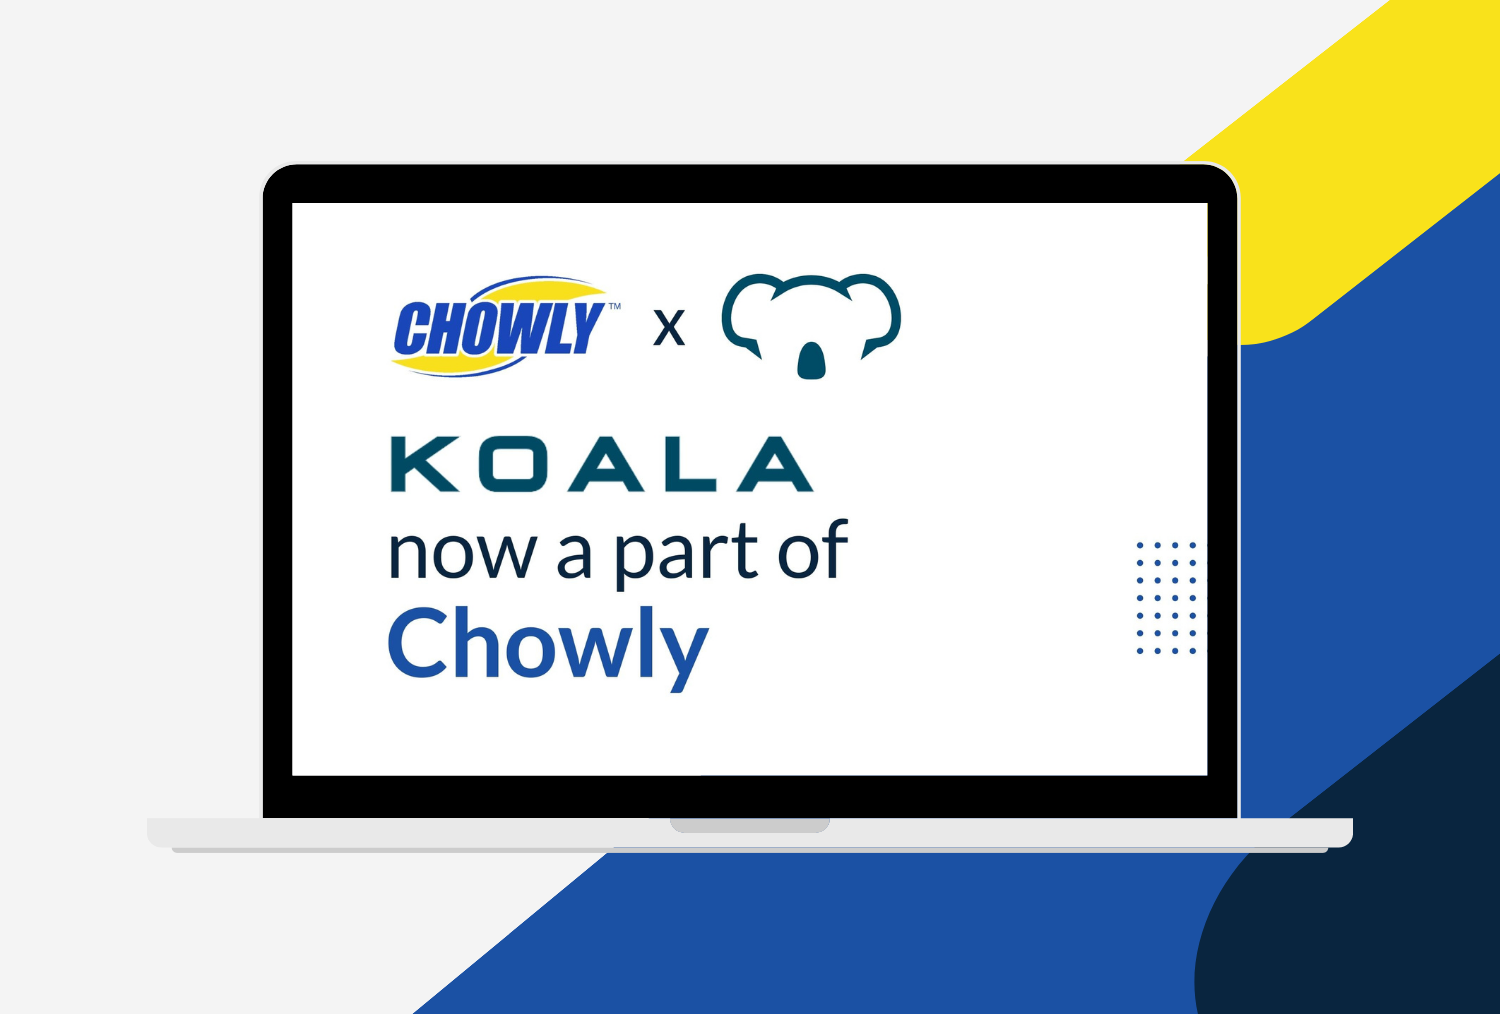 Chowly acquired Koala